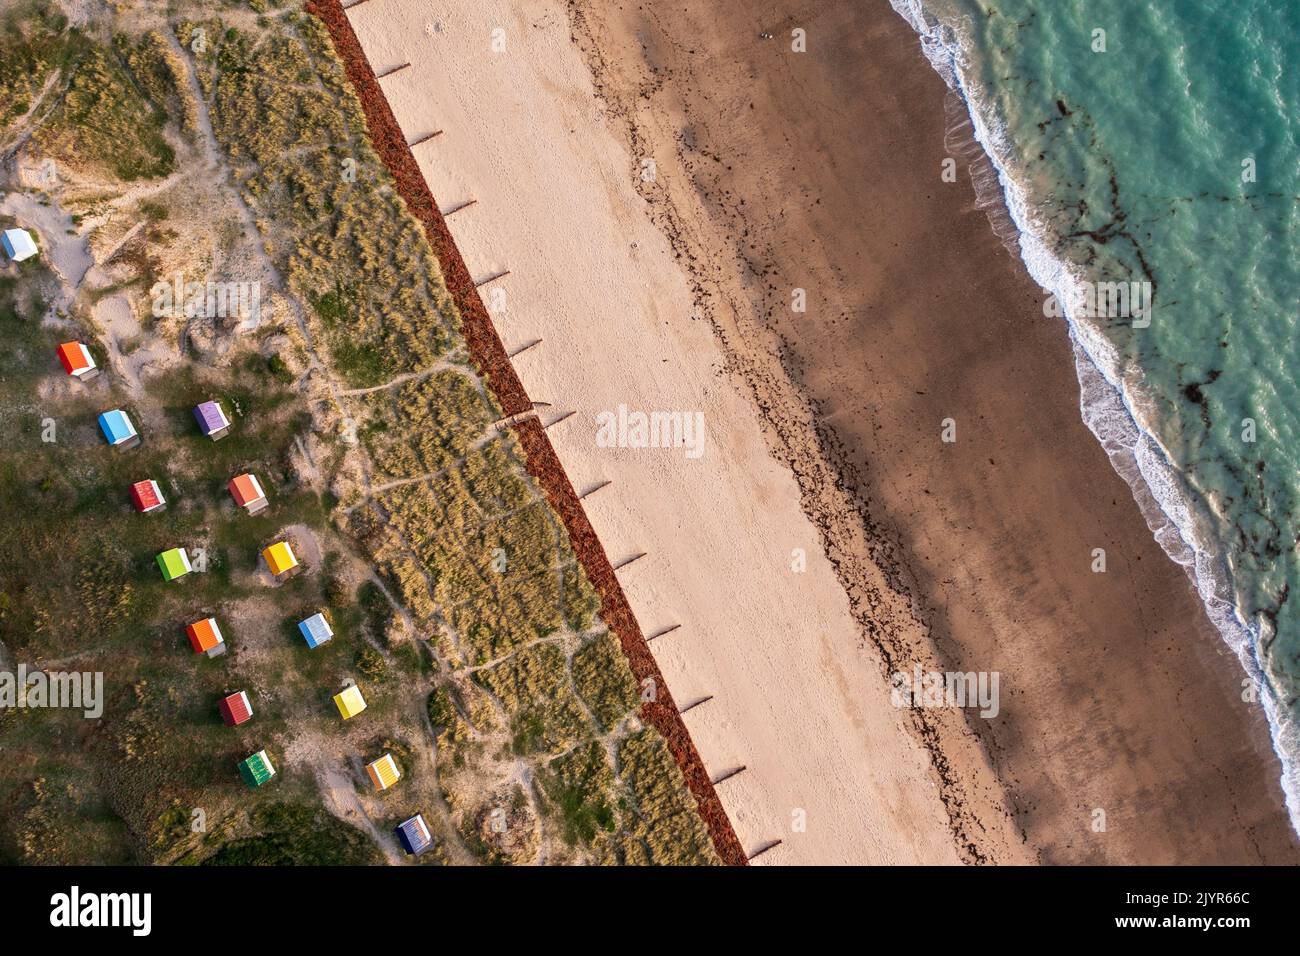 Vista aérea de las cabañas de playa en Gouville sur mer, La Mancha, Cotentin, Francia Foto de stock